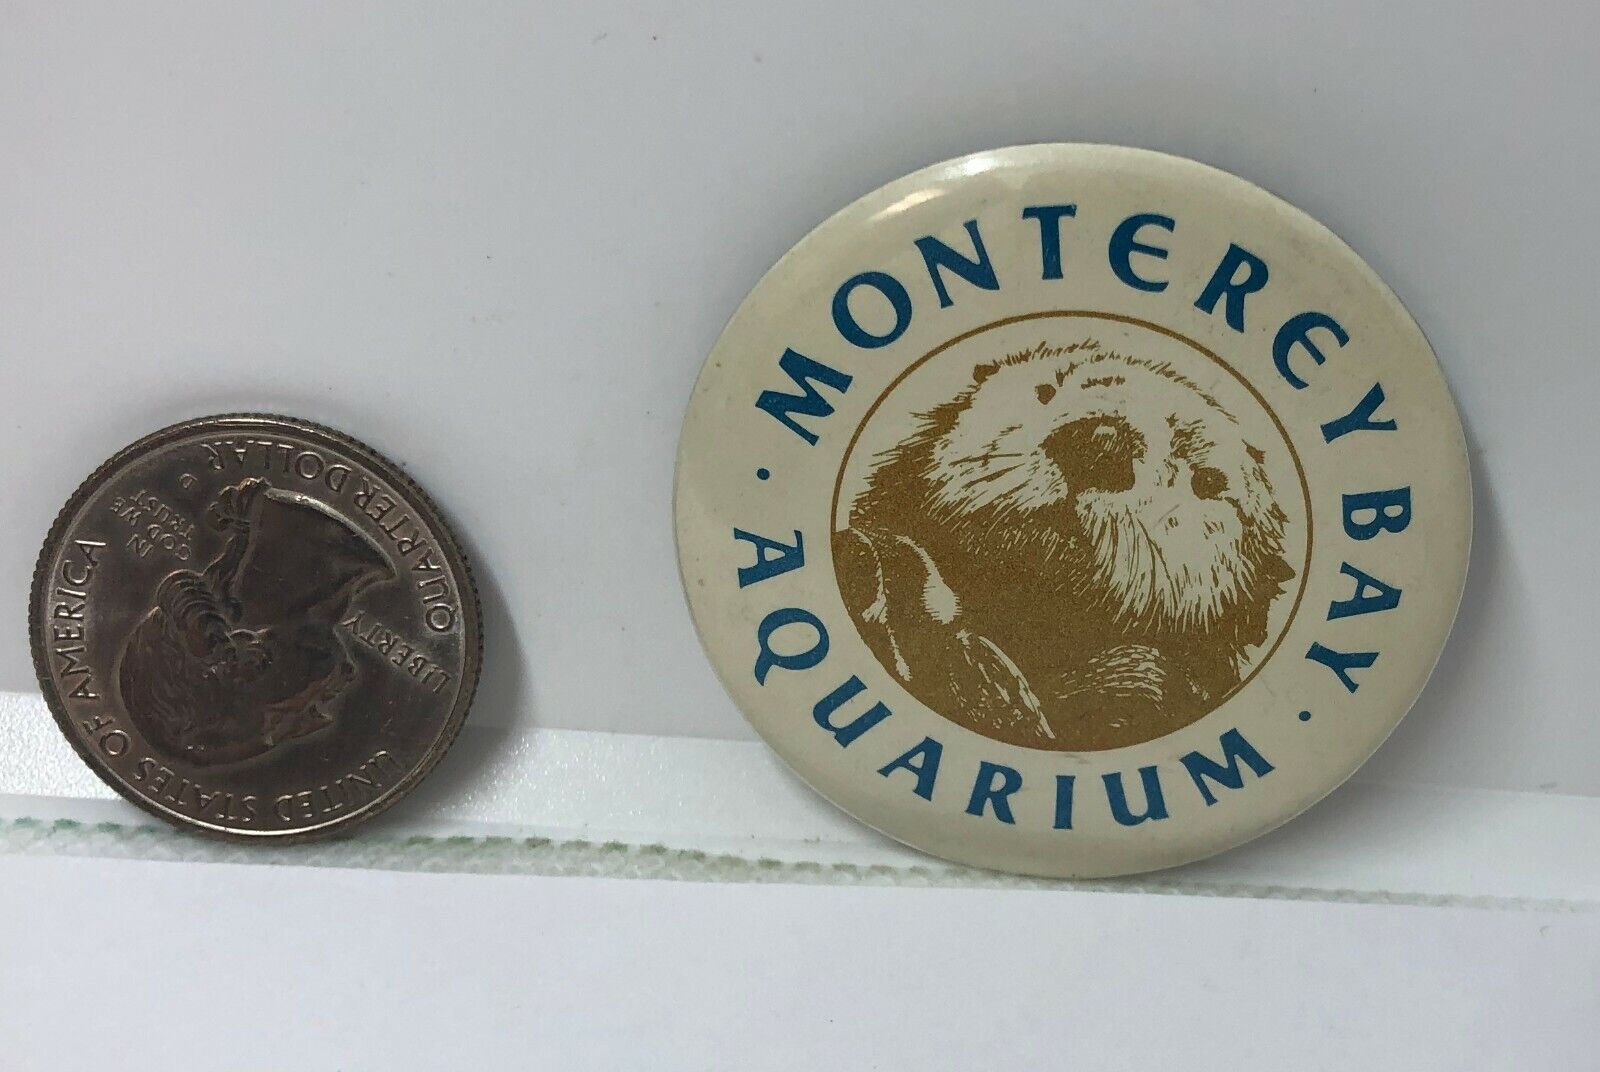 Monterey Bay Aquarium Pin